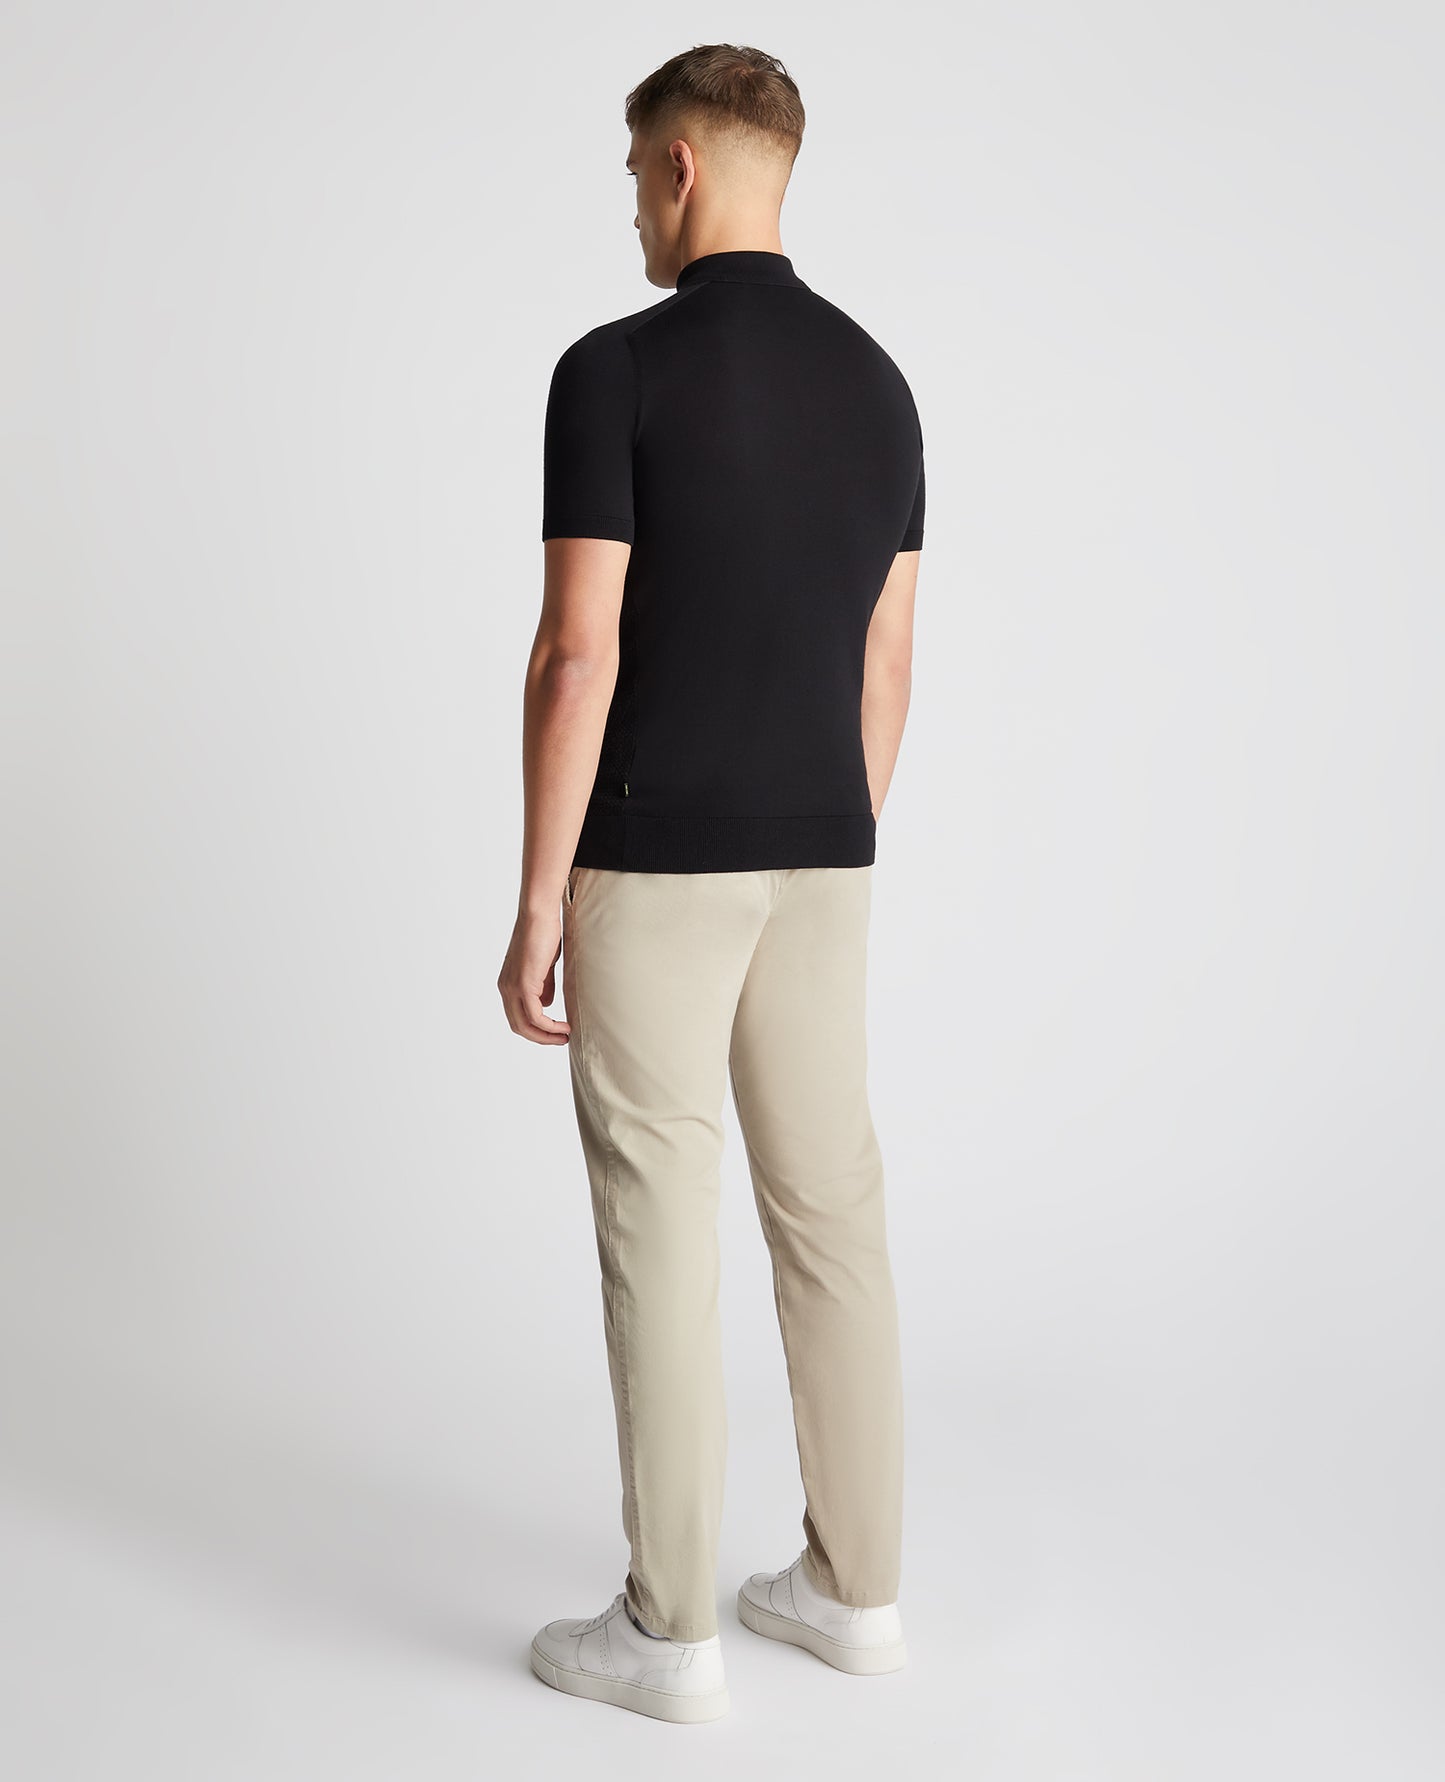 Remus Uomo Short Sleeve Knitted Polo Shirt - Black